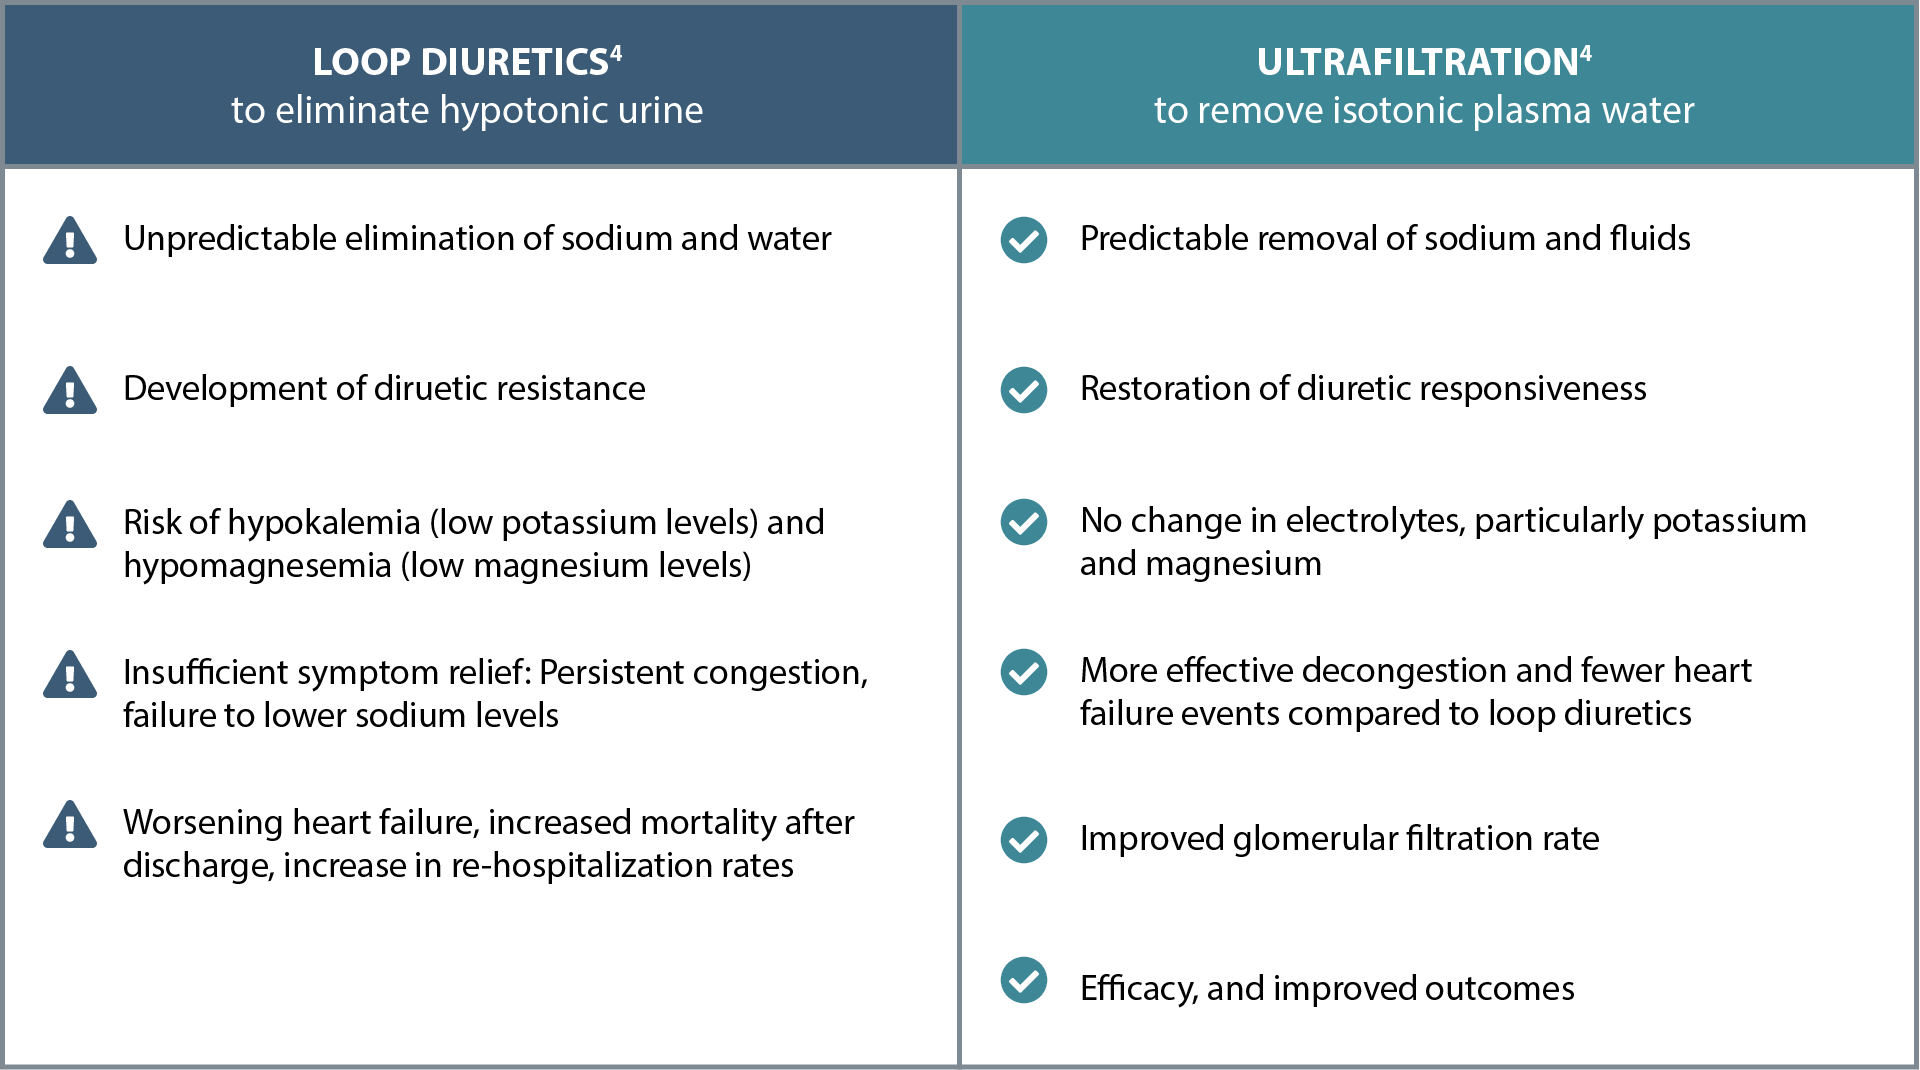 Diuretics vs Ultrafiltration